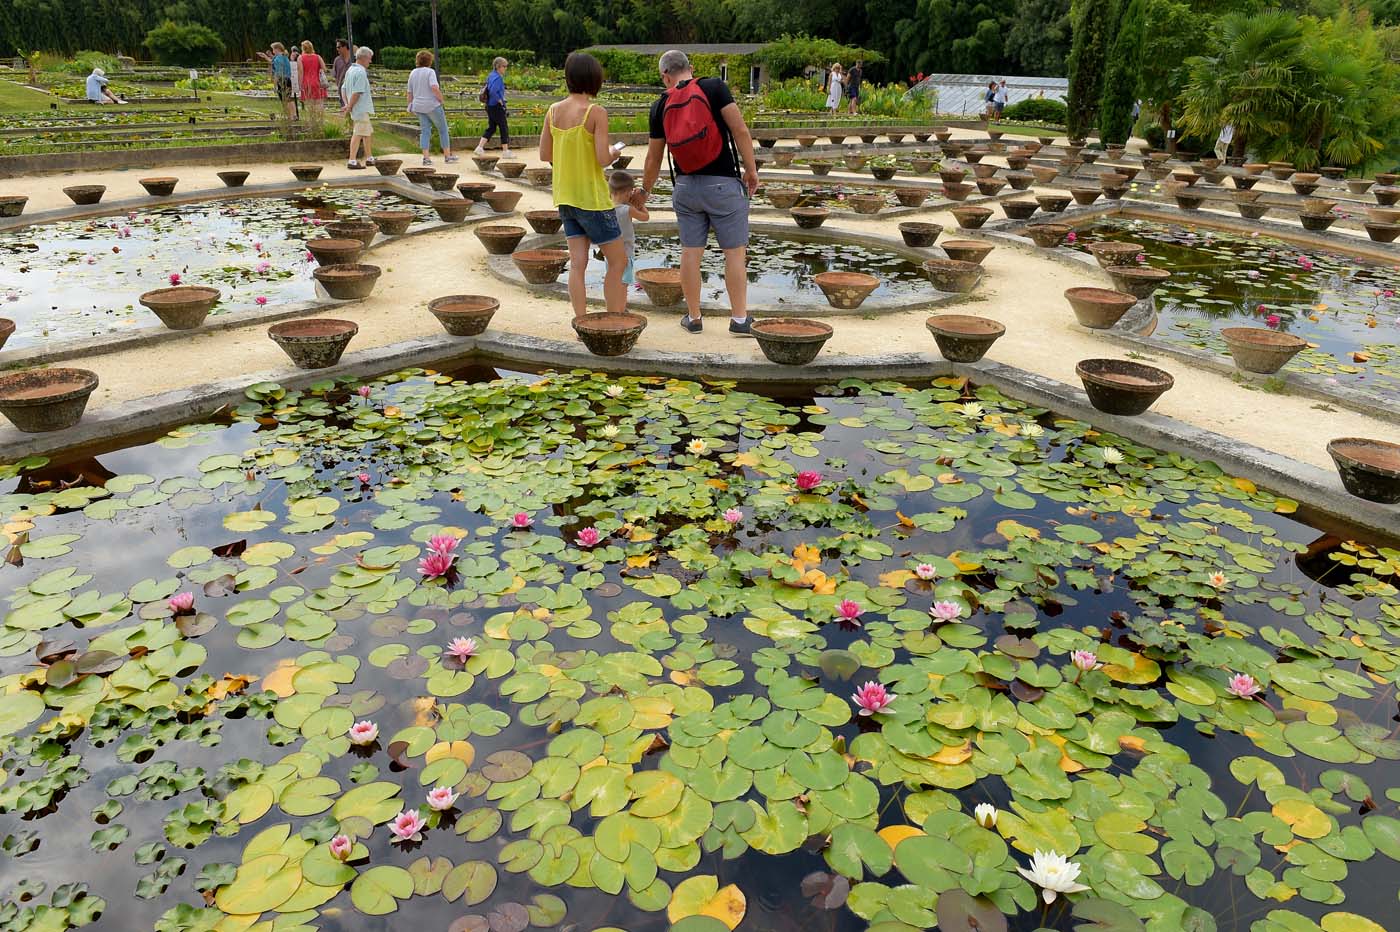 El jardín que inspiró a Monet sigue en flor en Francia (fotos)